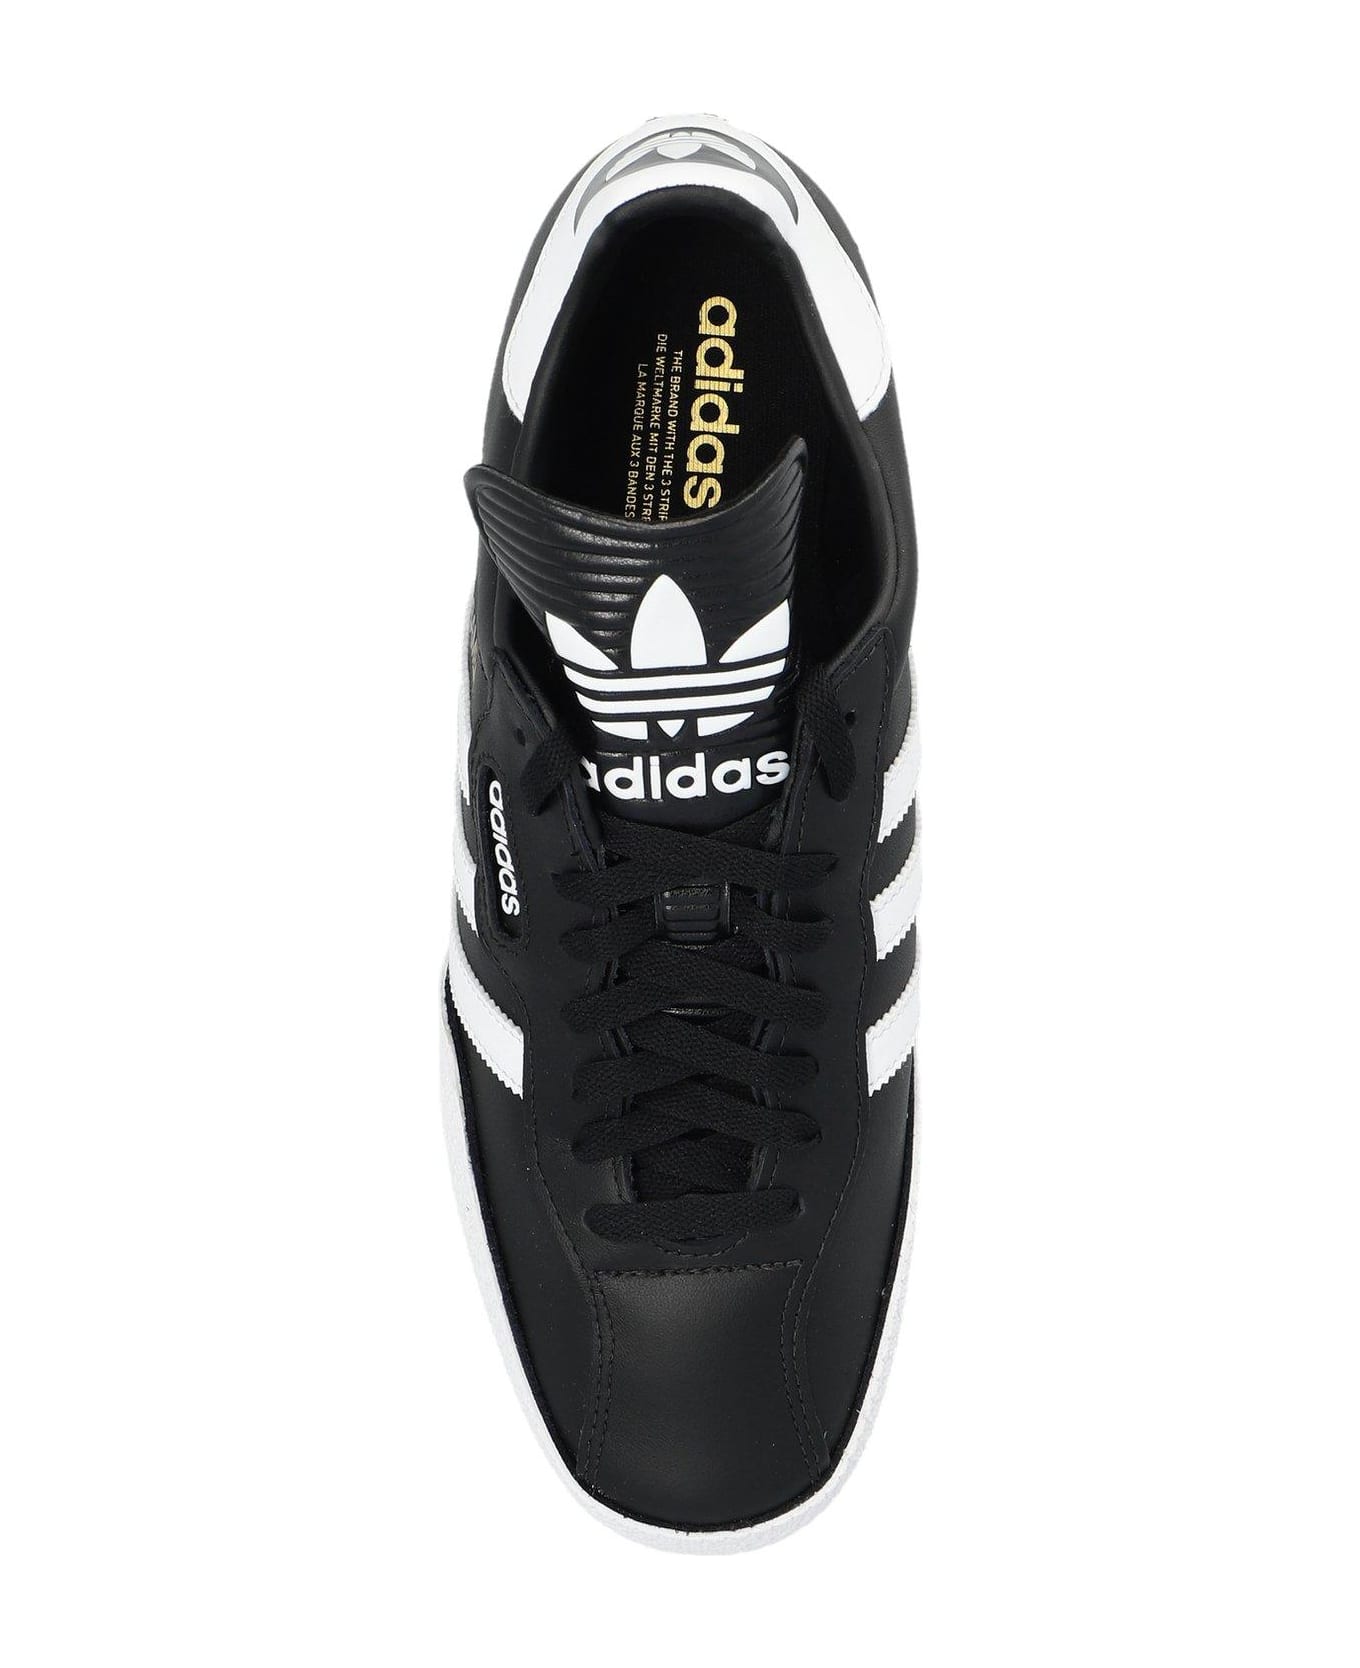 Adidas Originals Samba Super Lace-up Sneakers - Black/ftwwht/black